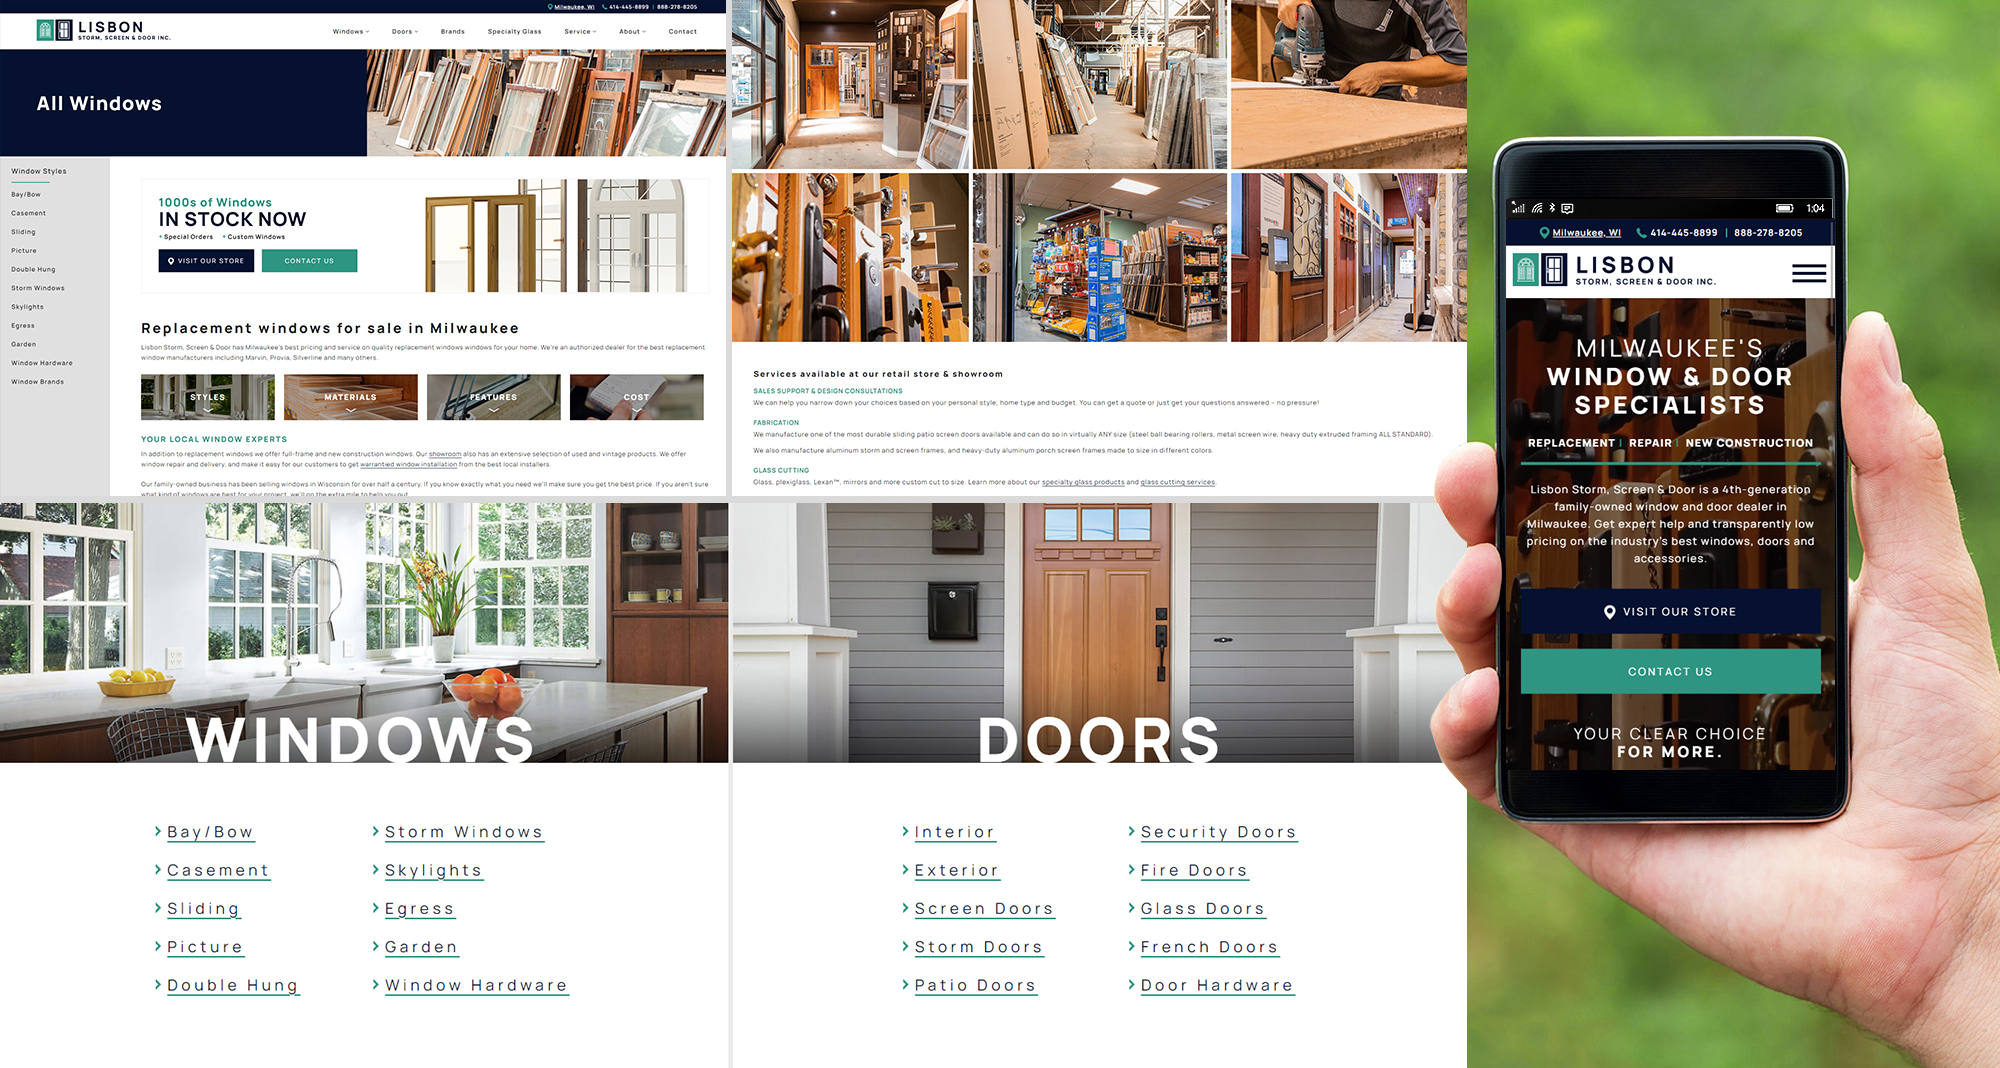 Milwaukee web marketing for Lisbon Storm, Screen & Door